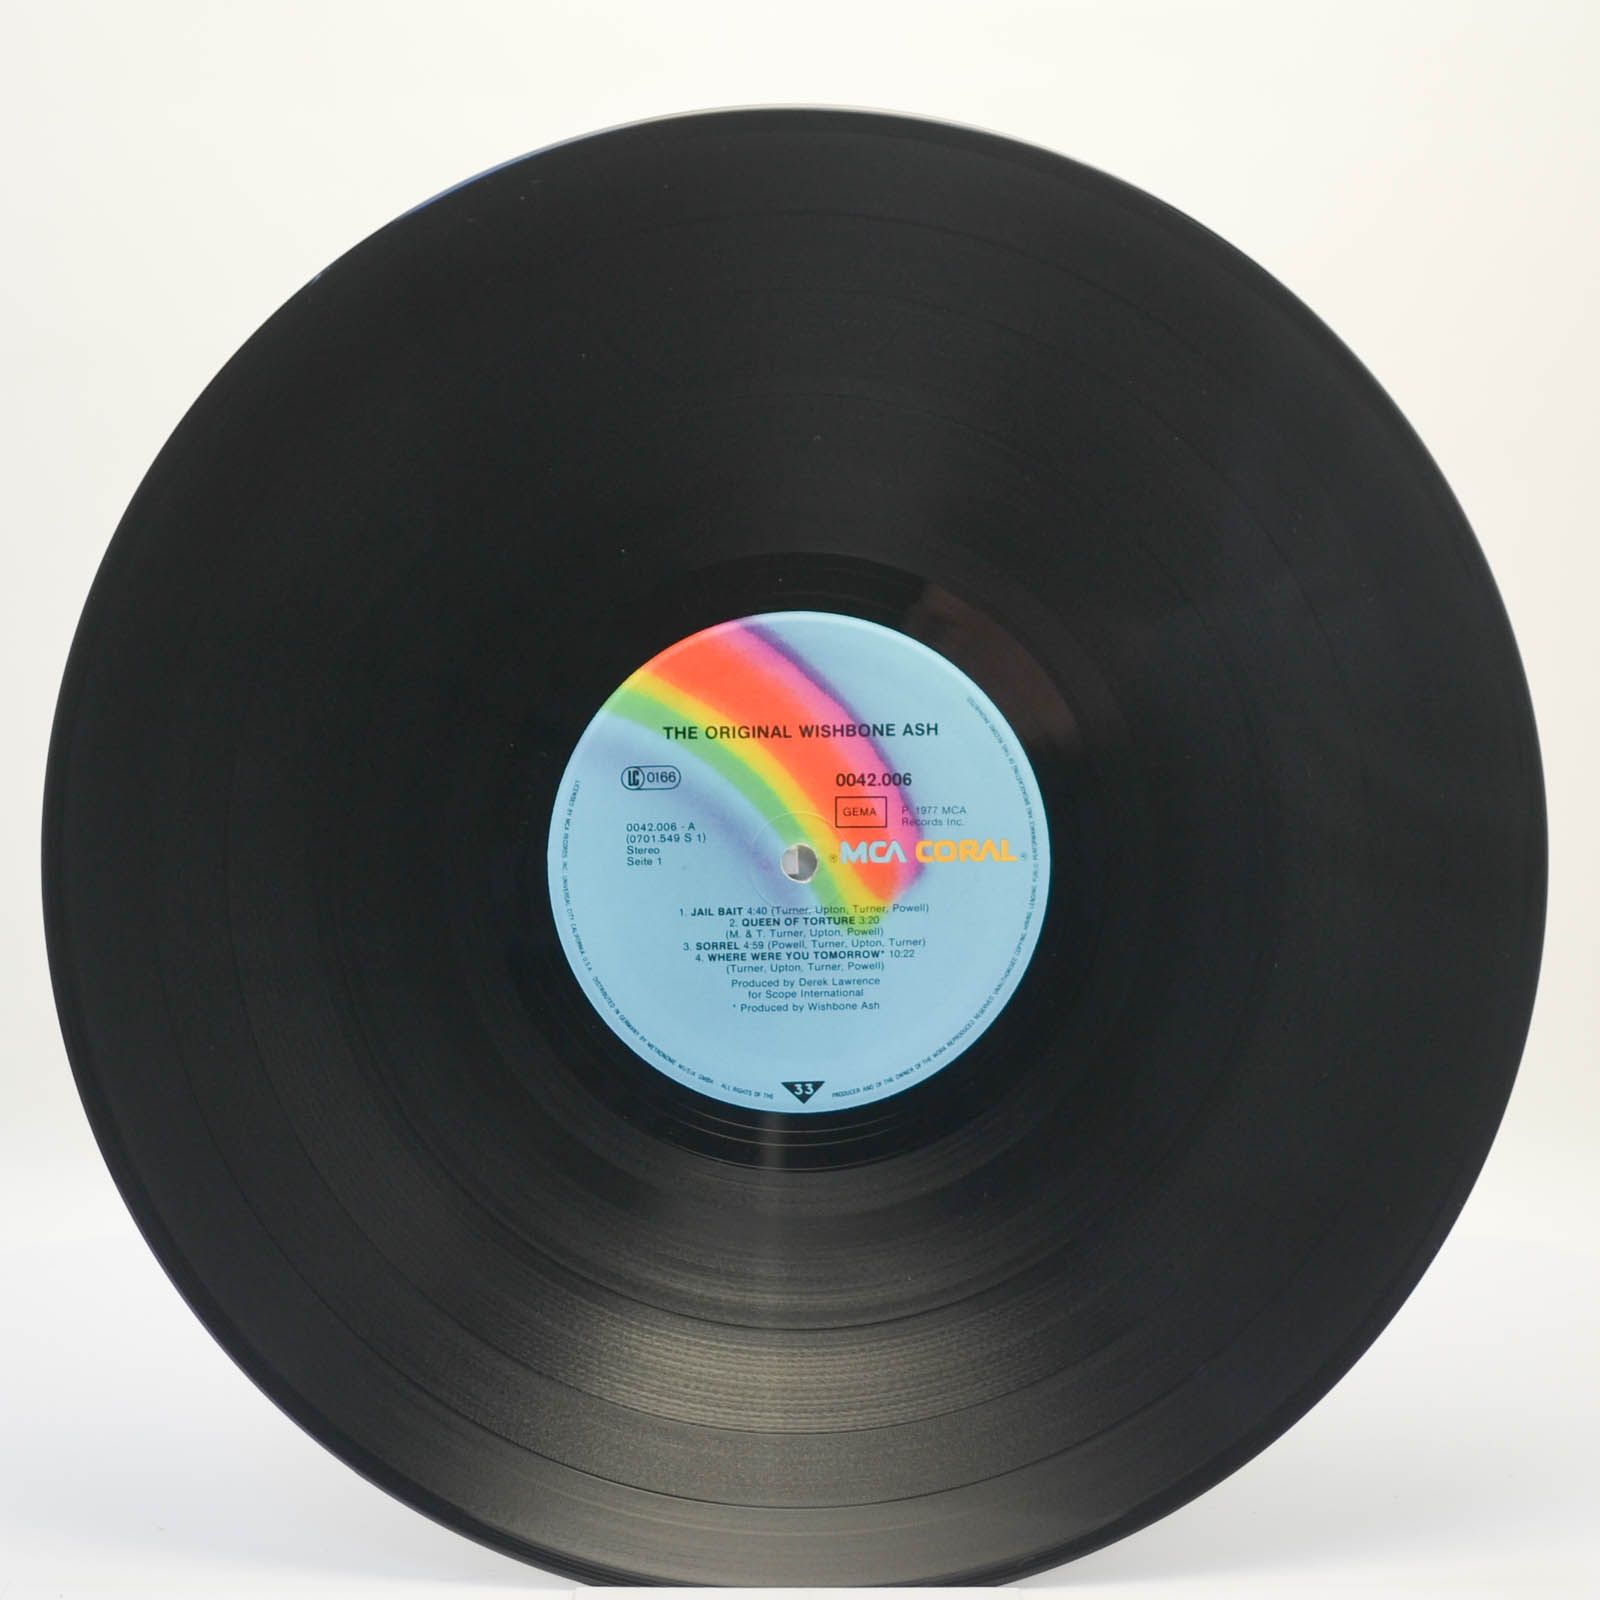 Wishbone Ash — The Original Wishbone Ash, 1977